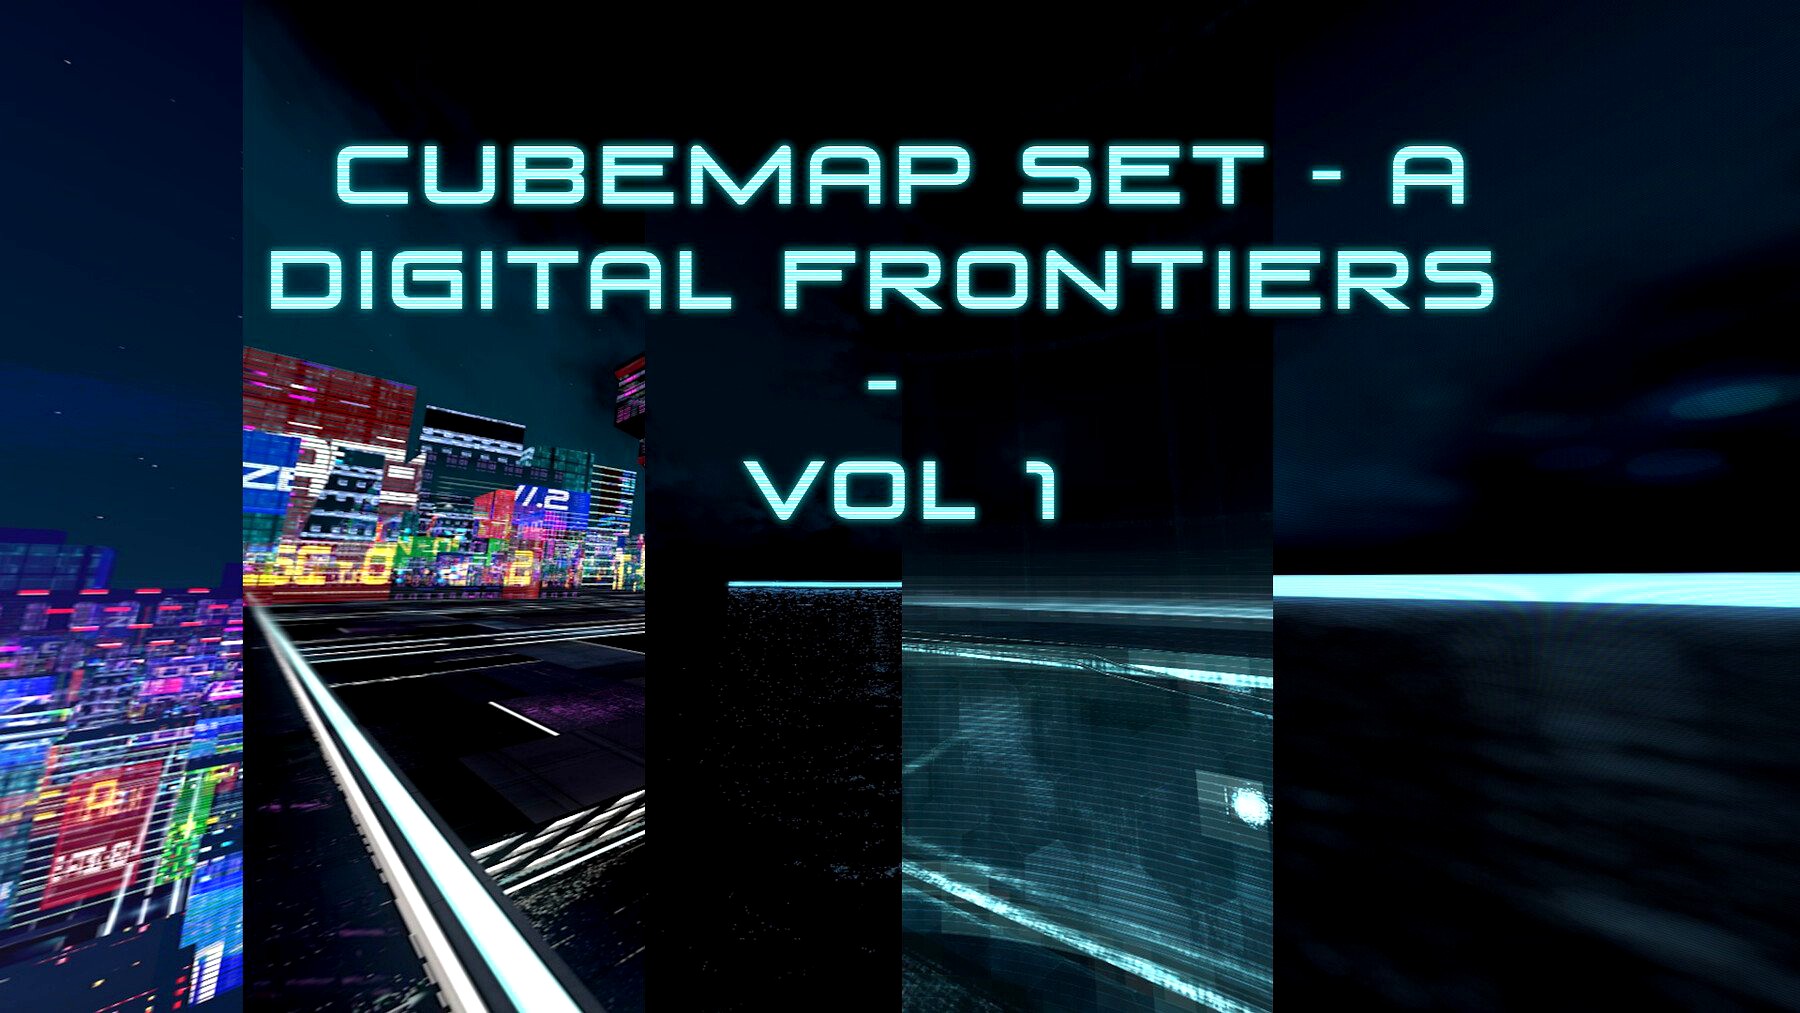 Cubemap Skybox Set A - Digital Frontiers Vol 1 - HDRI - For Game Dev & Media